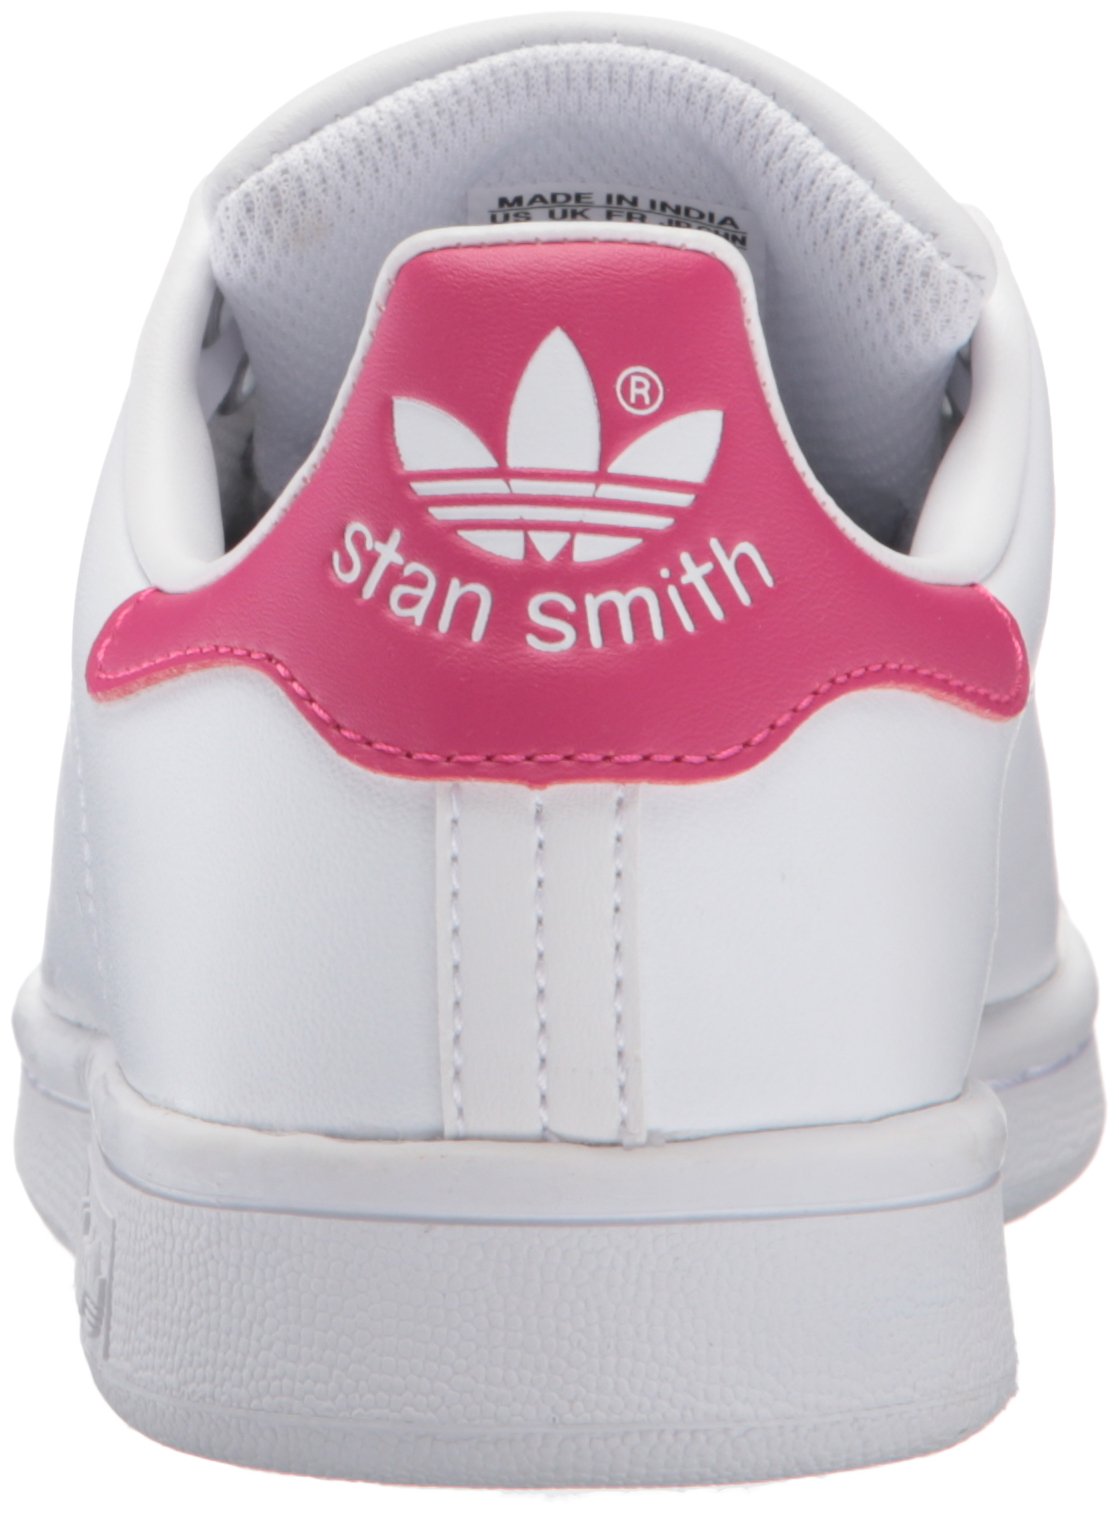 adidas Originals Unisex-Adult Stan Smith (2016) Trainers, 8